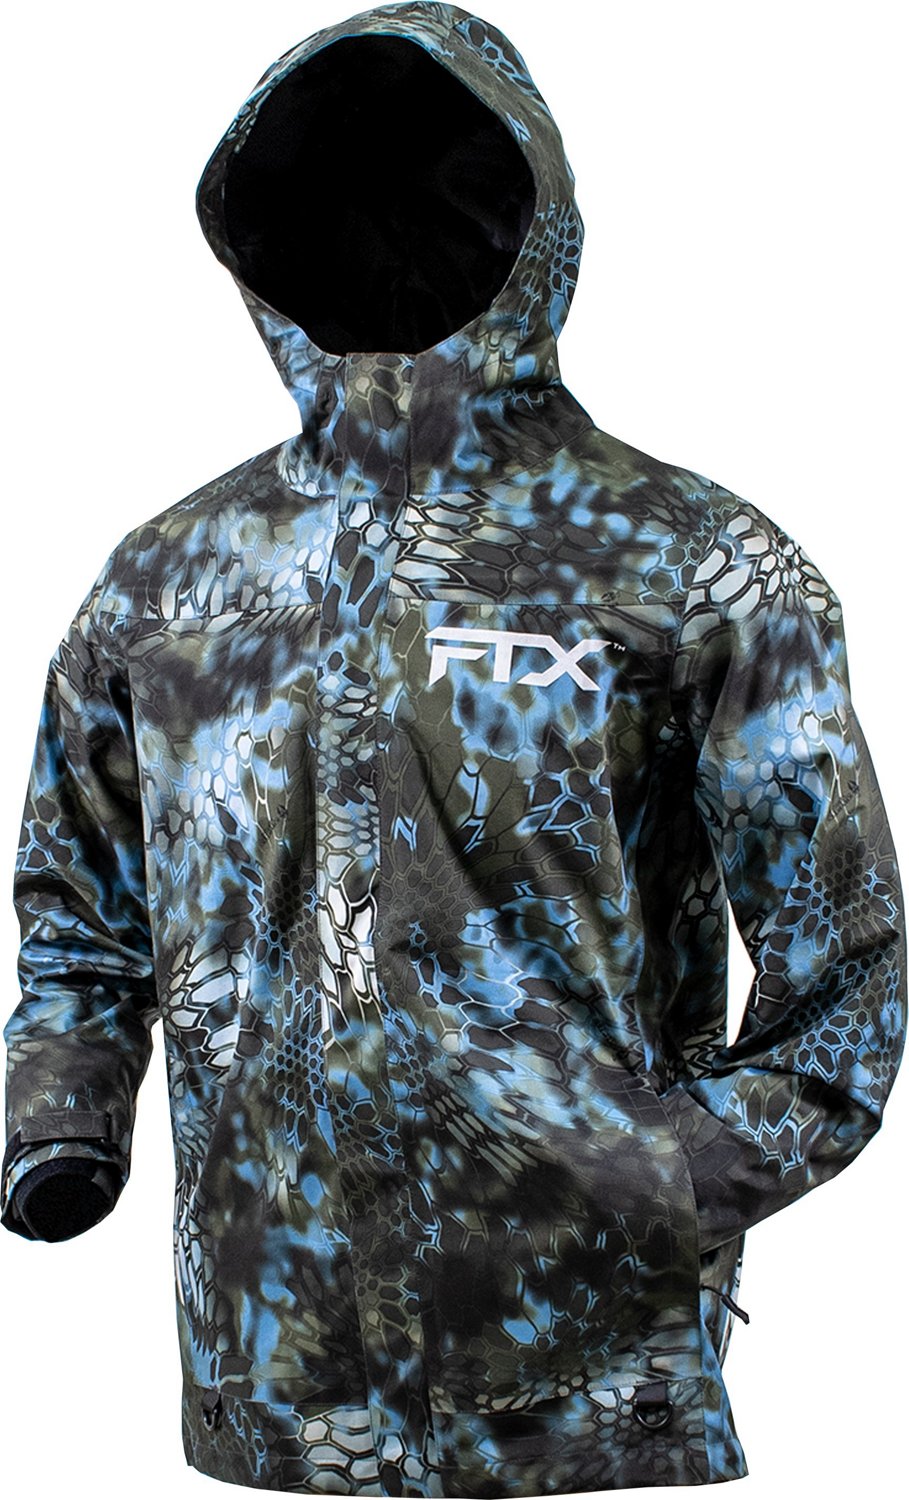 Frogg Toggs Men's FTX Armor Jacket, Black